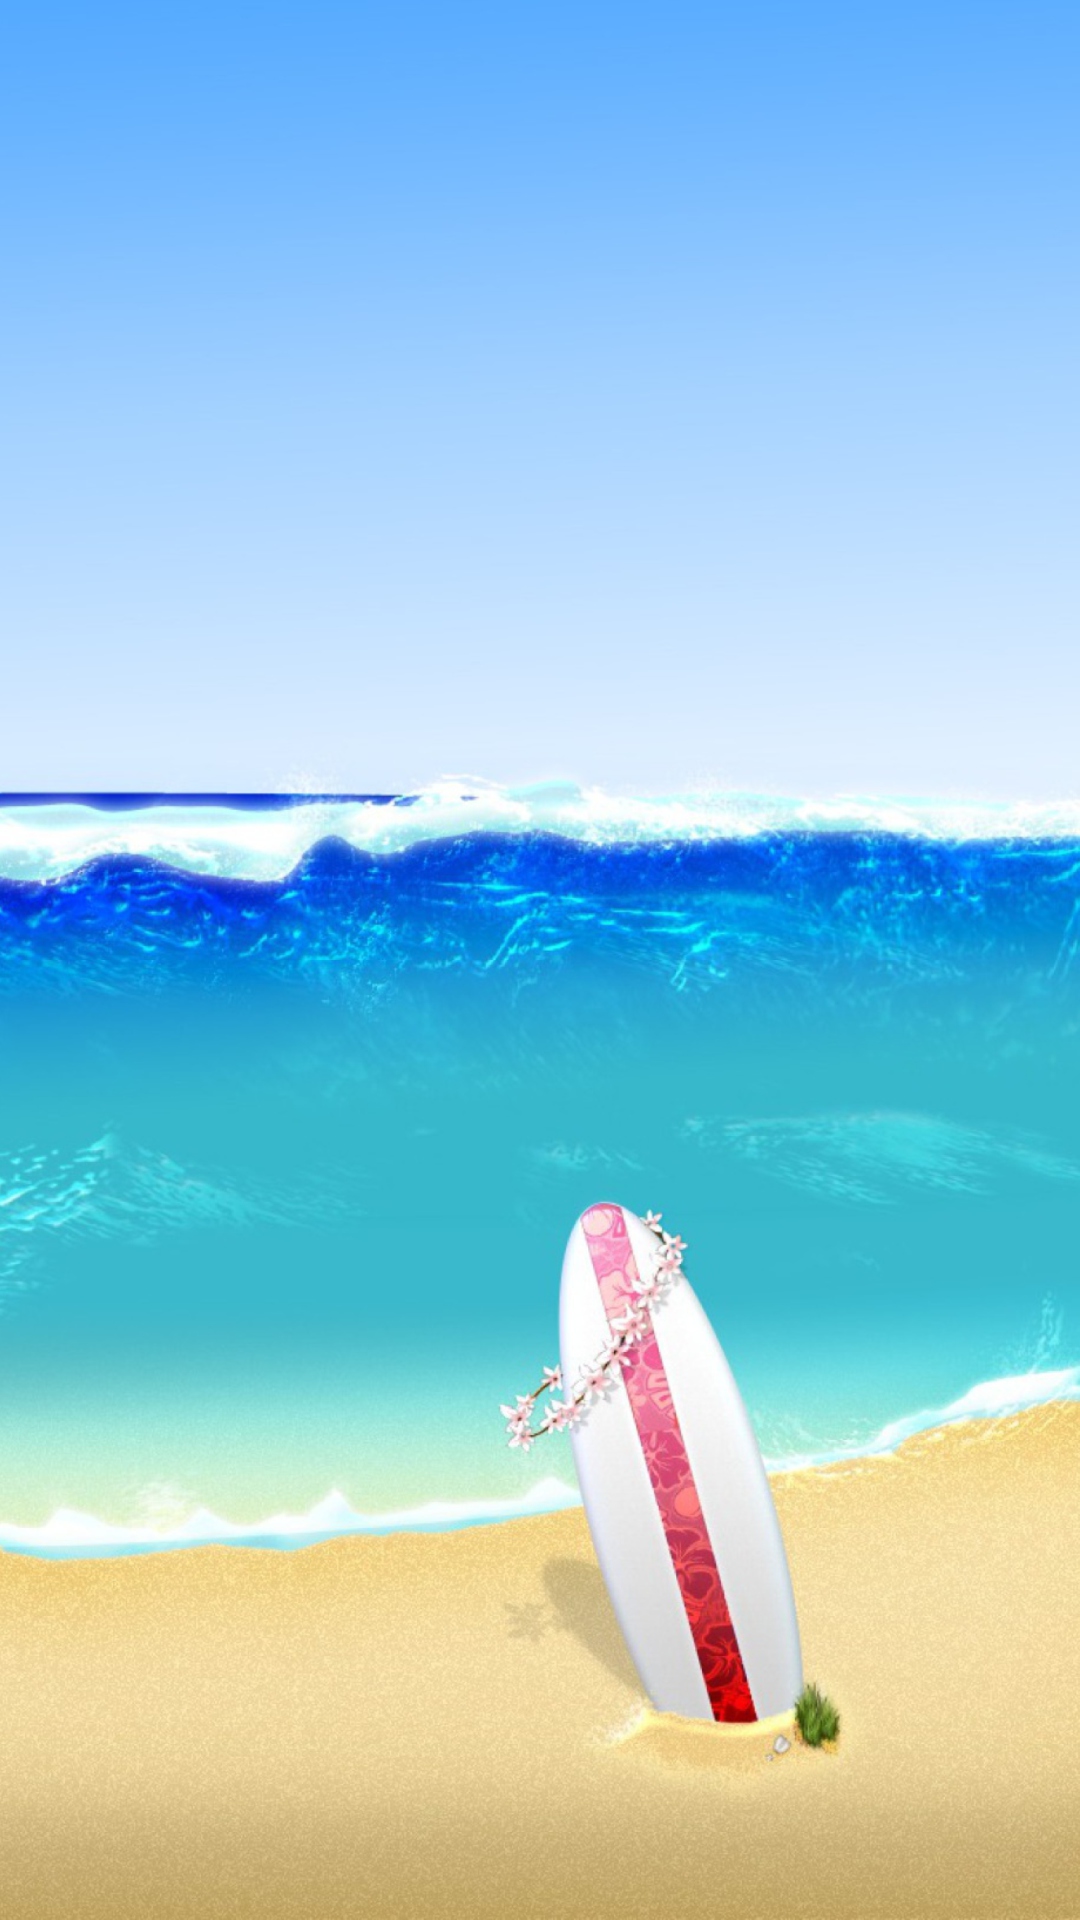 Обои Surf Season 1080x1920